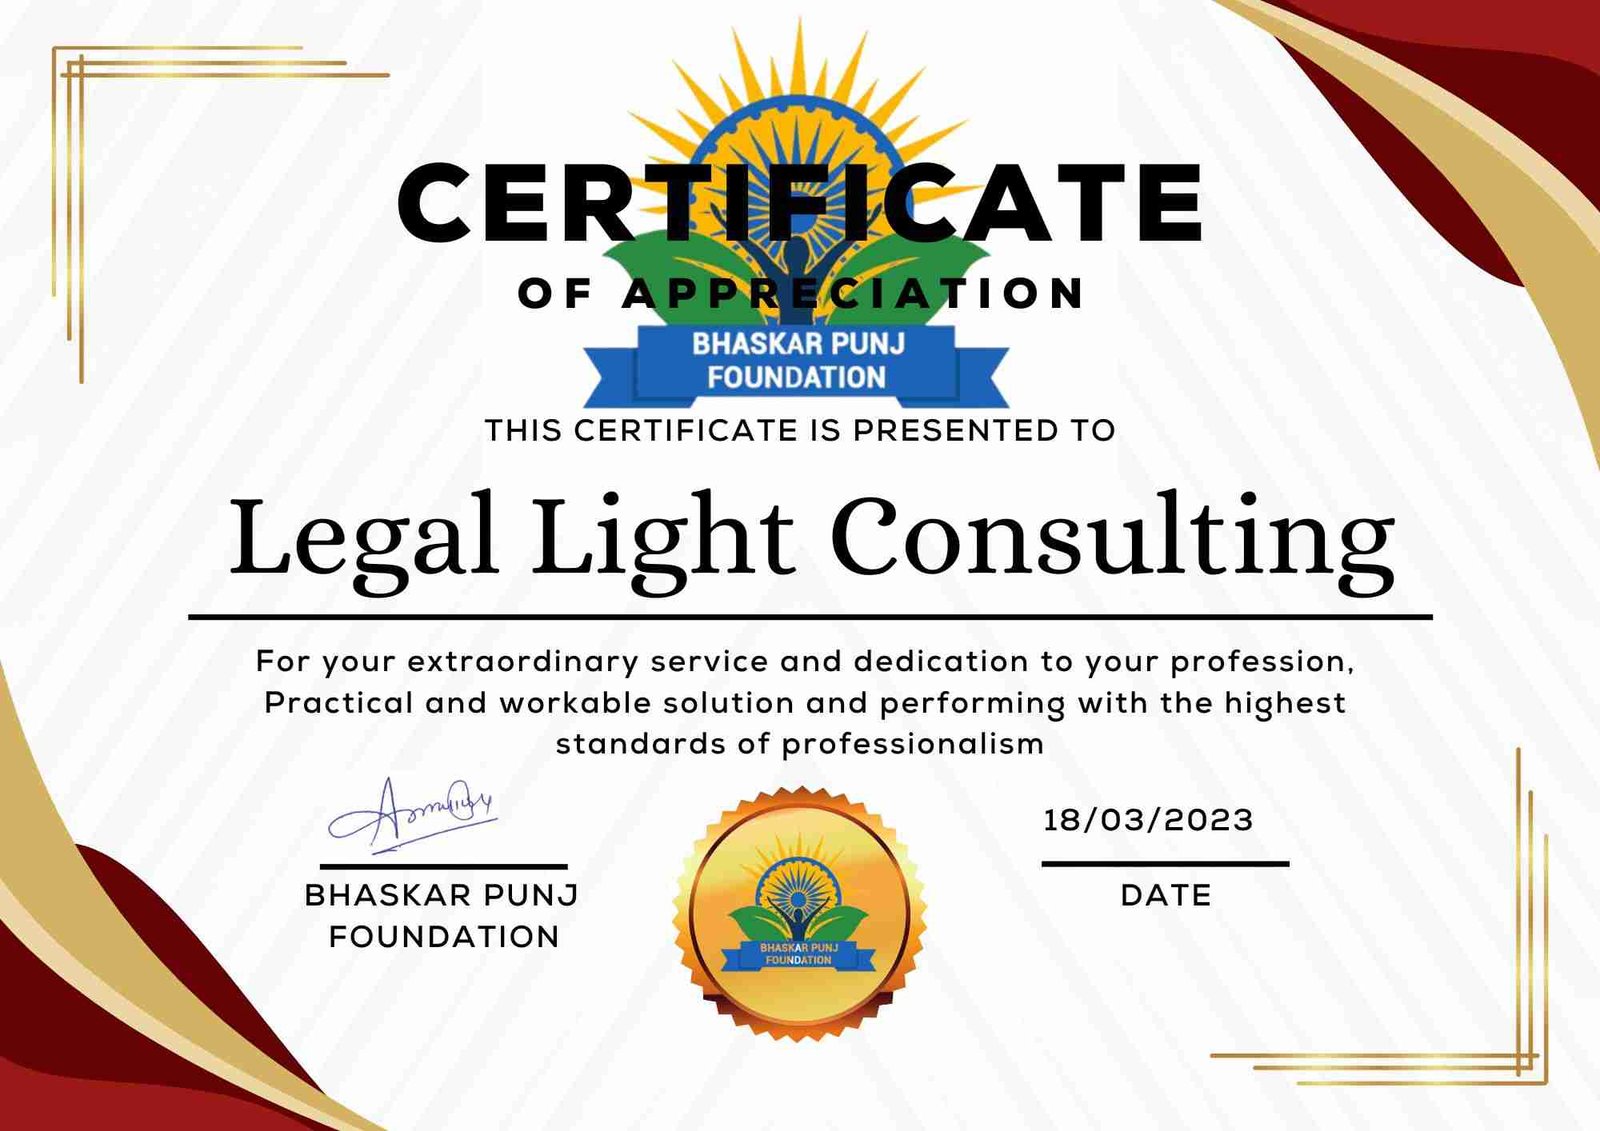 Appreciation certificate by Bhaskar Punj Foundation